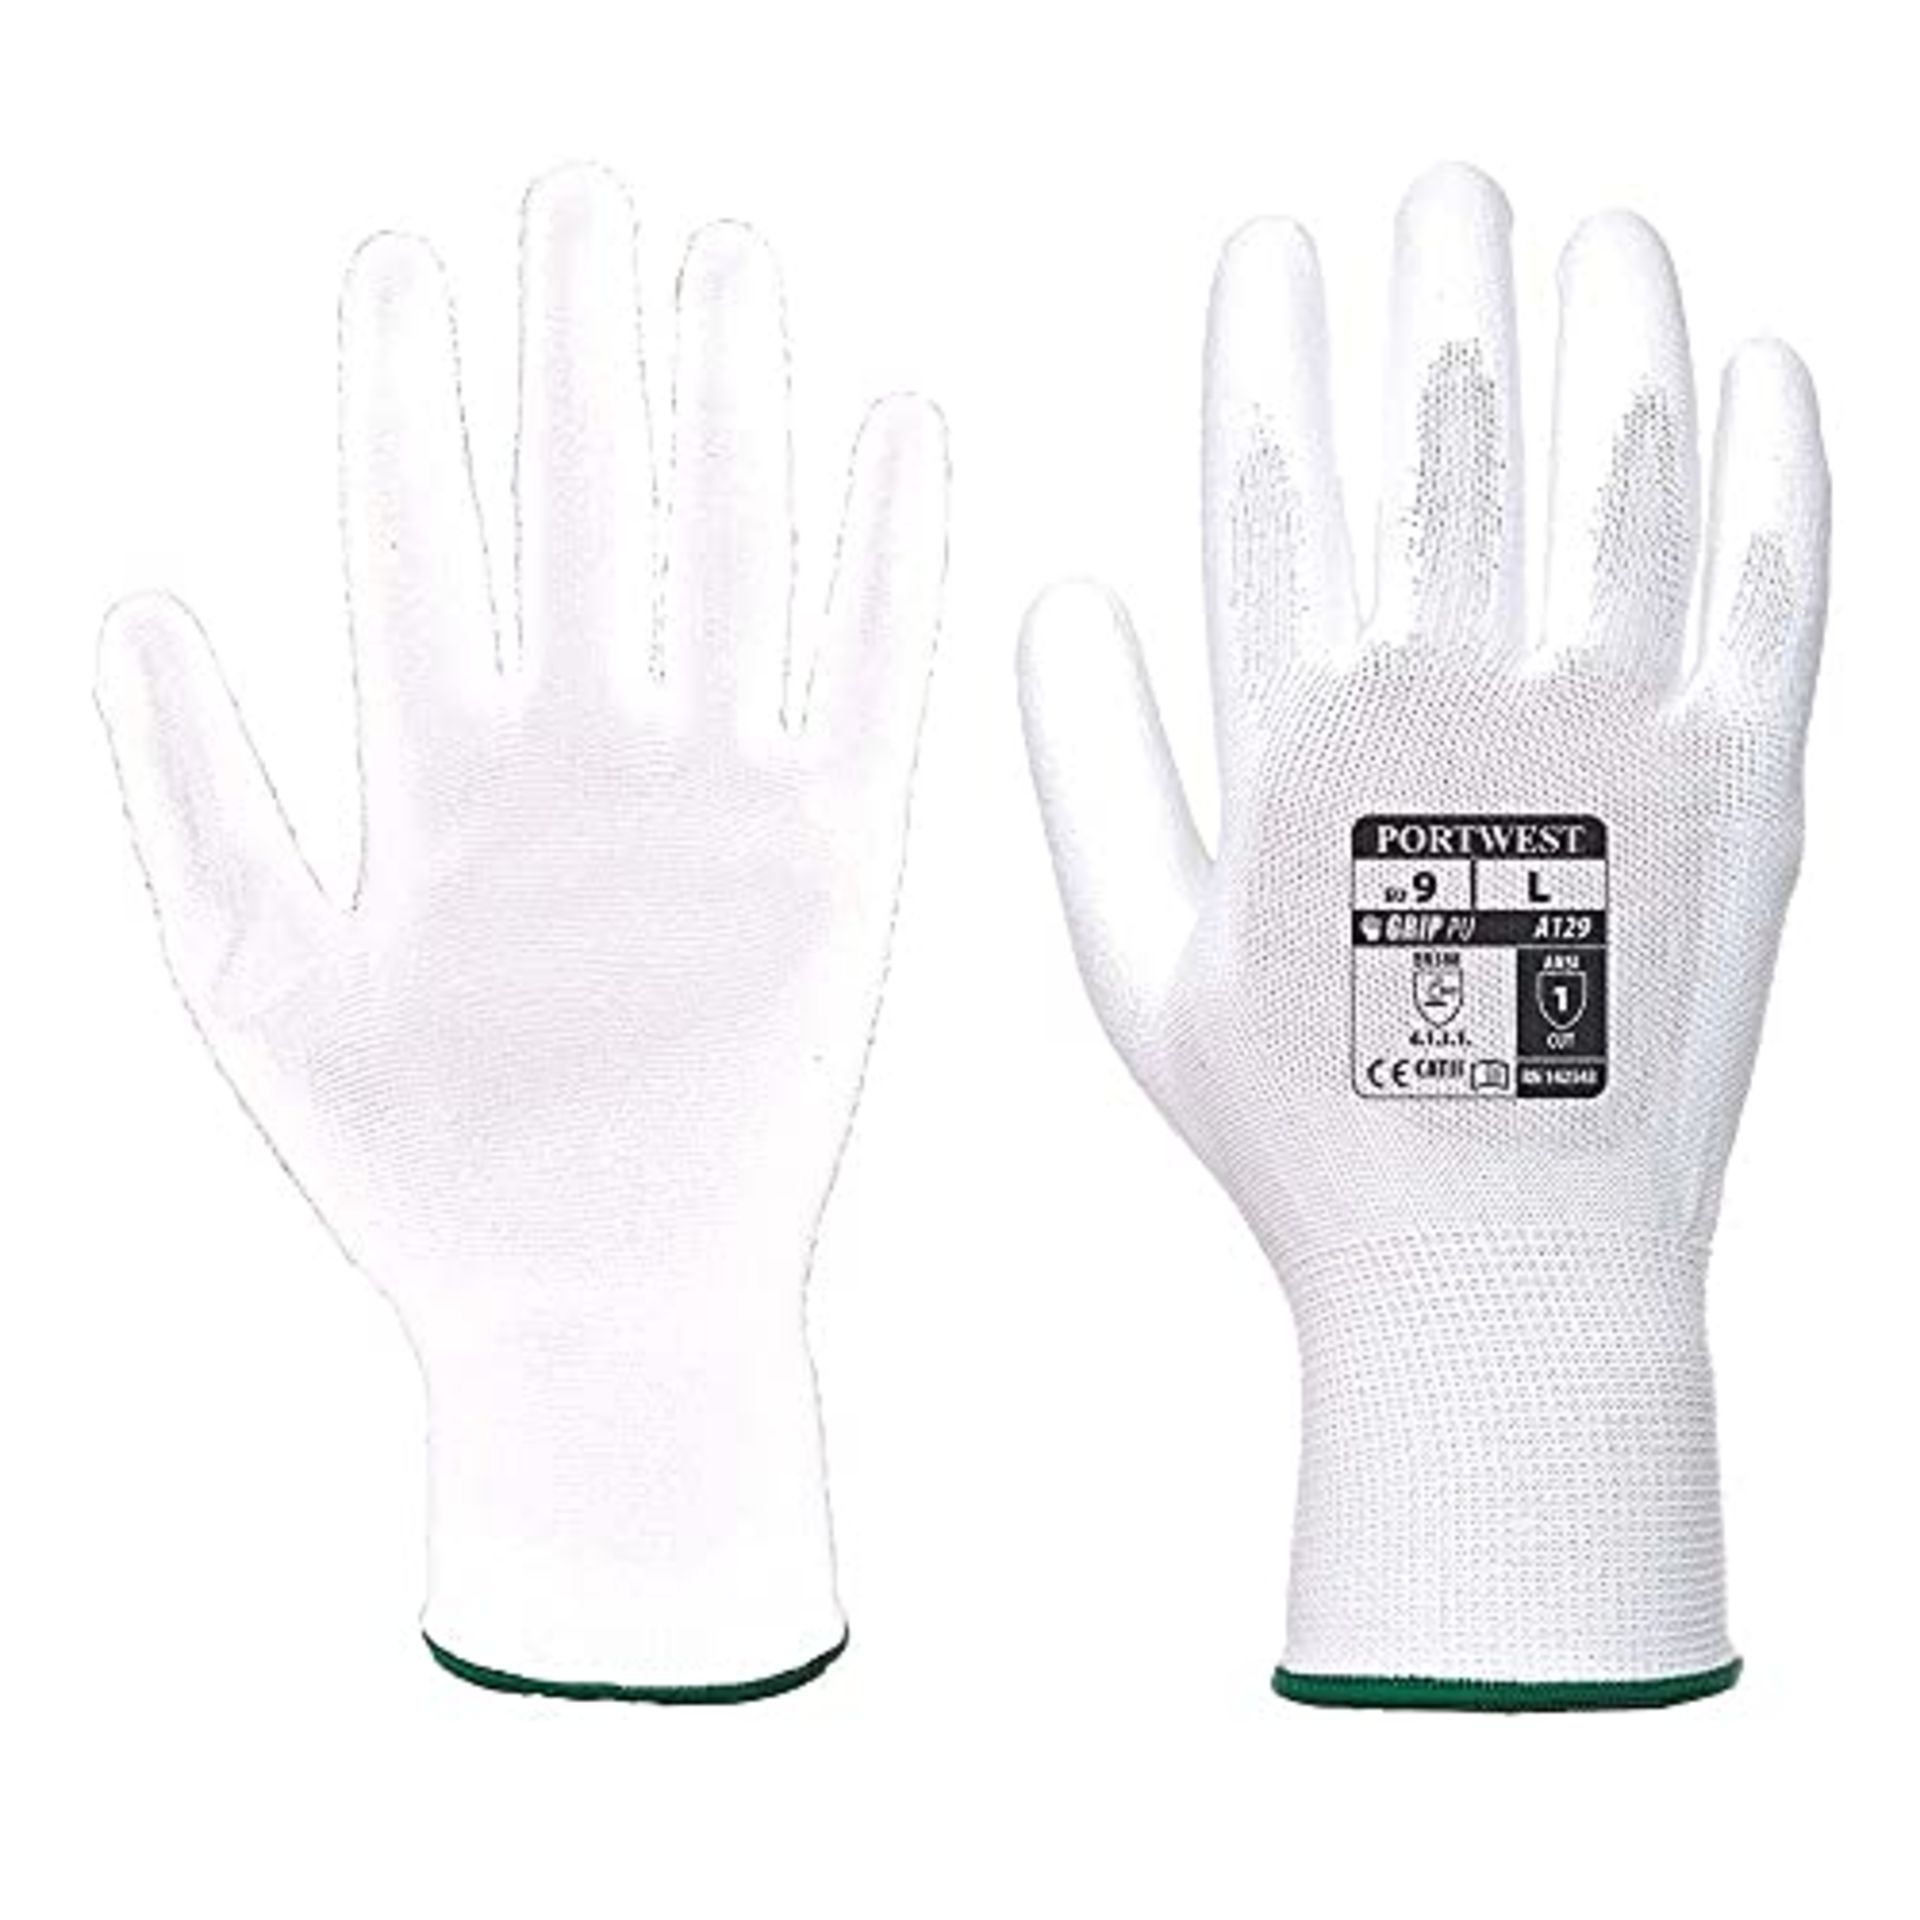 Portwest PU Palm Glove - Full Carton (480), Size: M, Colour: White, A129WHRM - Image 2 of 2